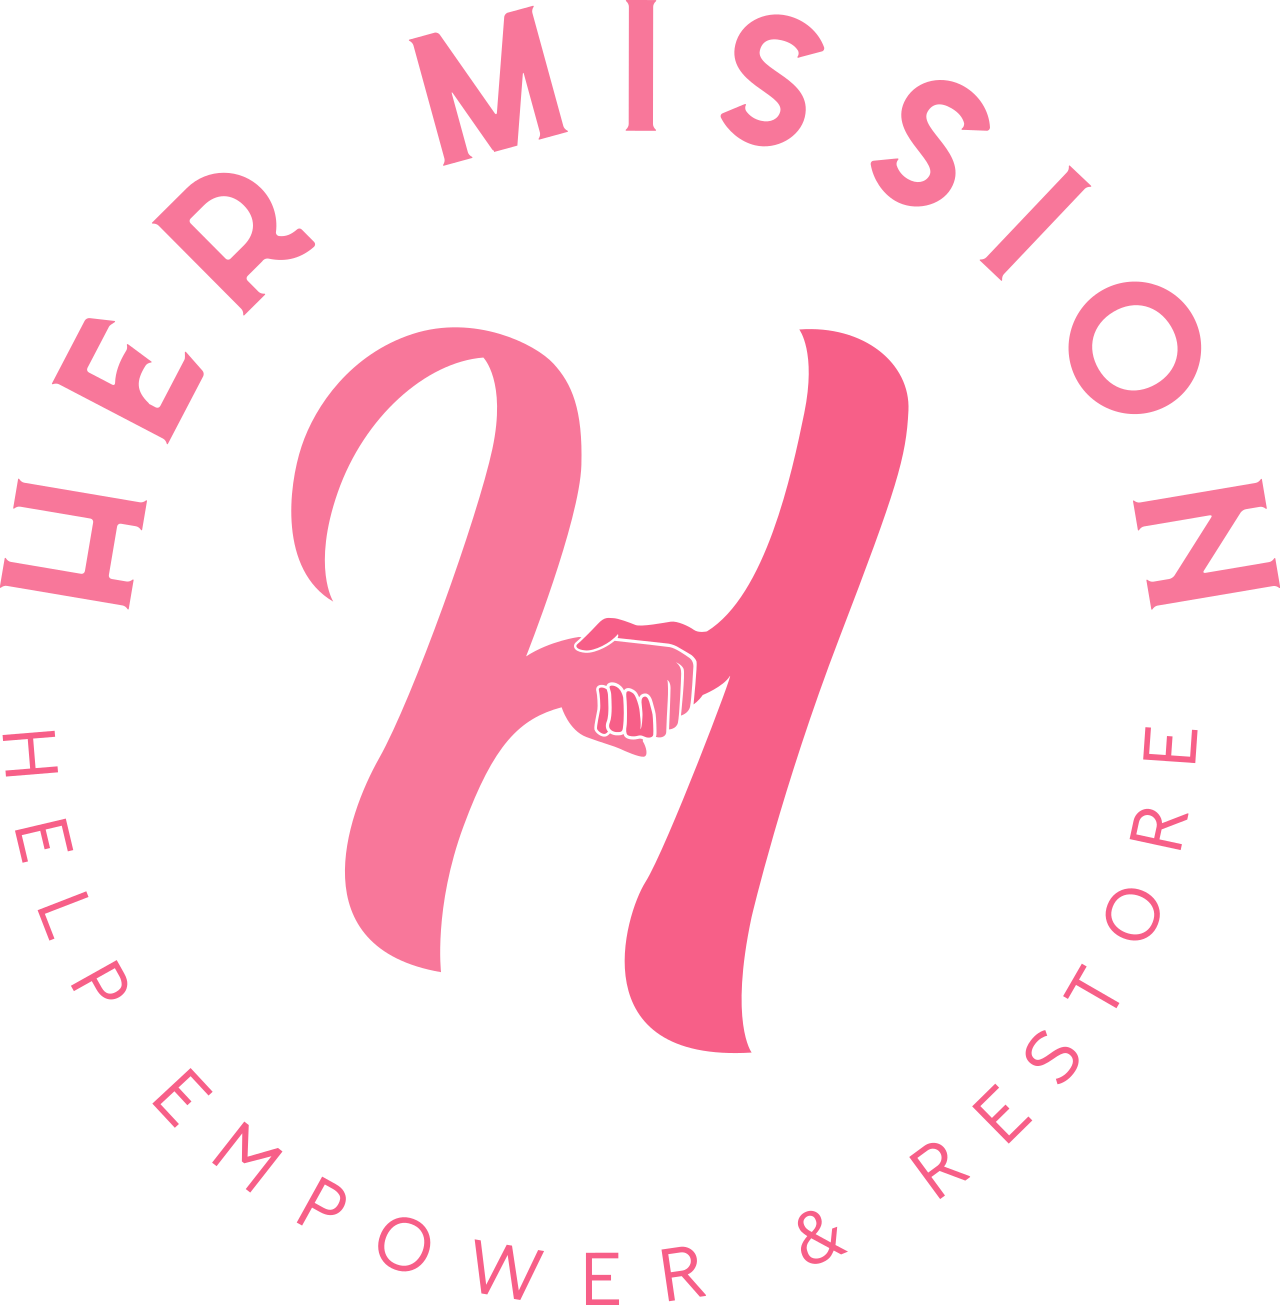 Her Mission's logo